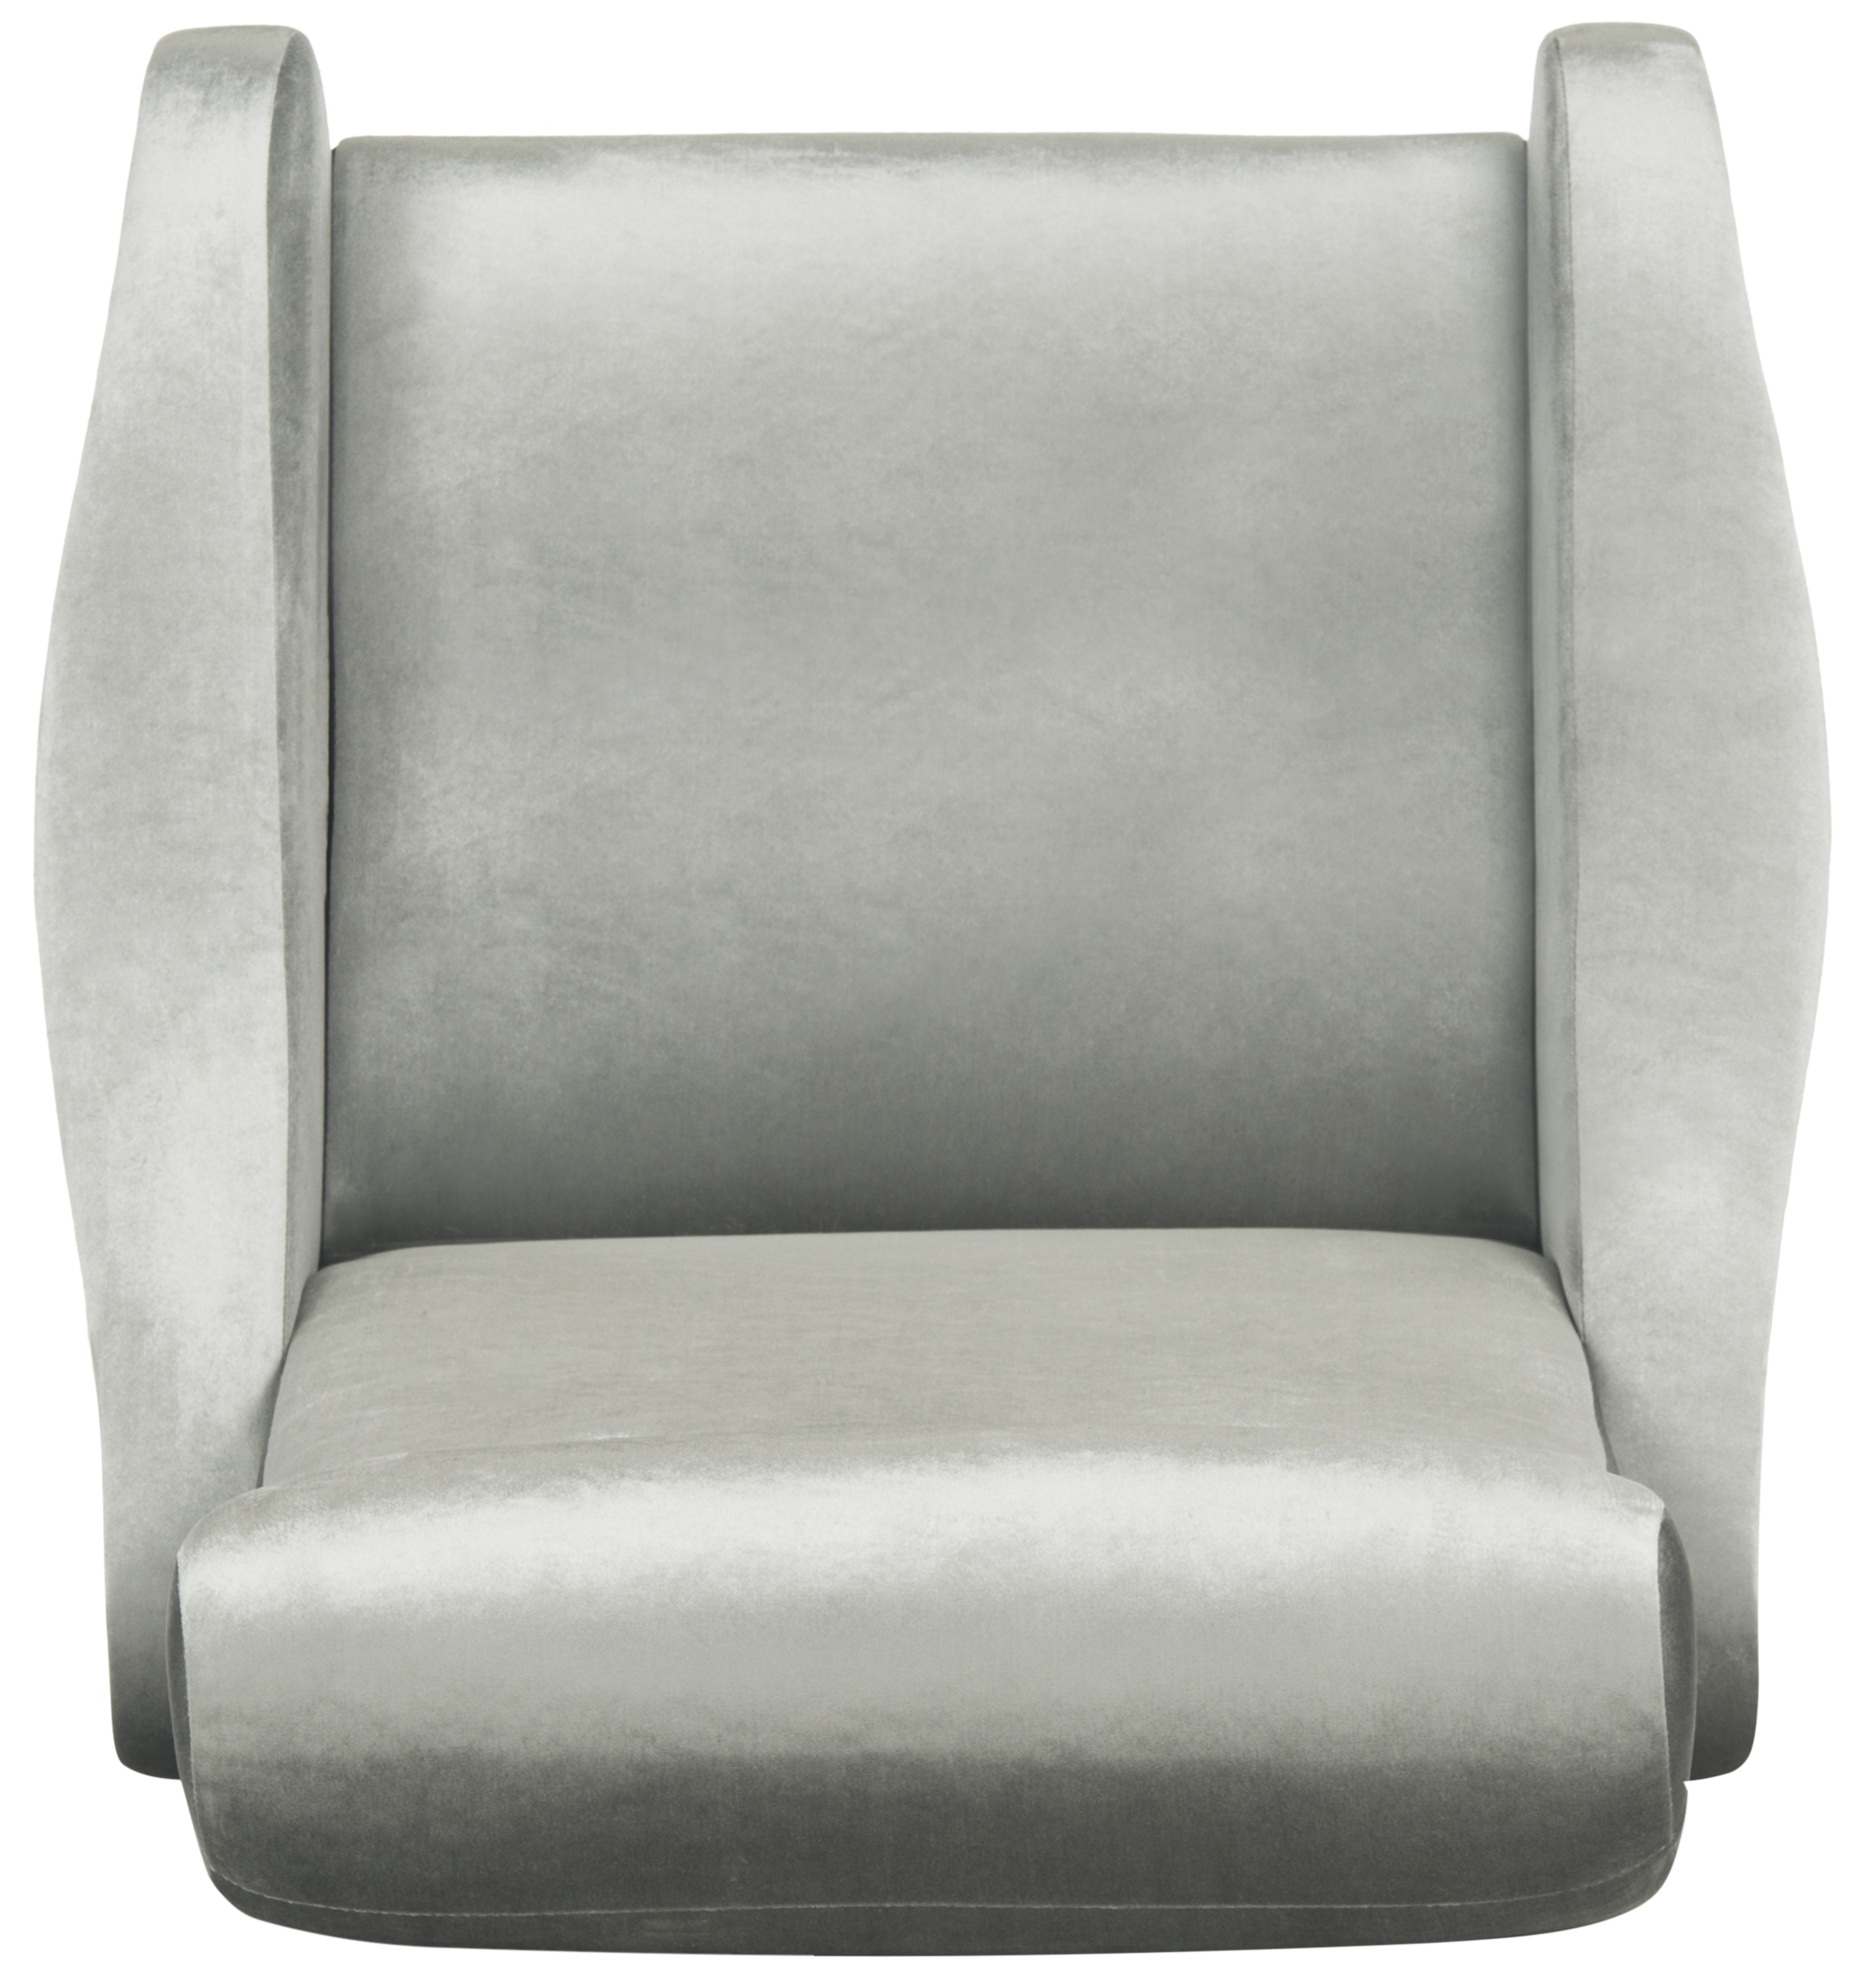 Elicia Velvet Retro Mid Centry Accent Chair - Light Grey - Arlo Home - Image 1